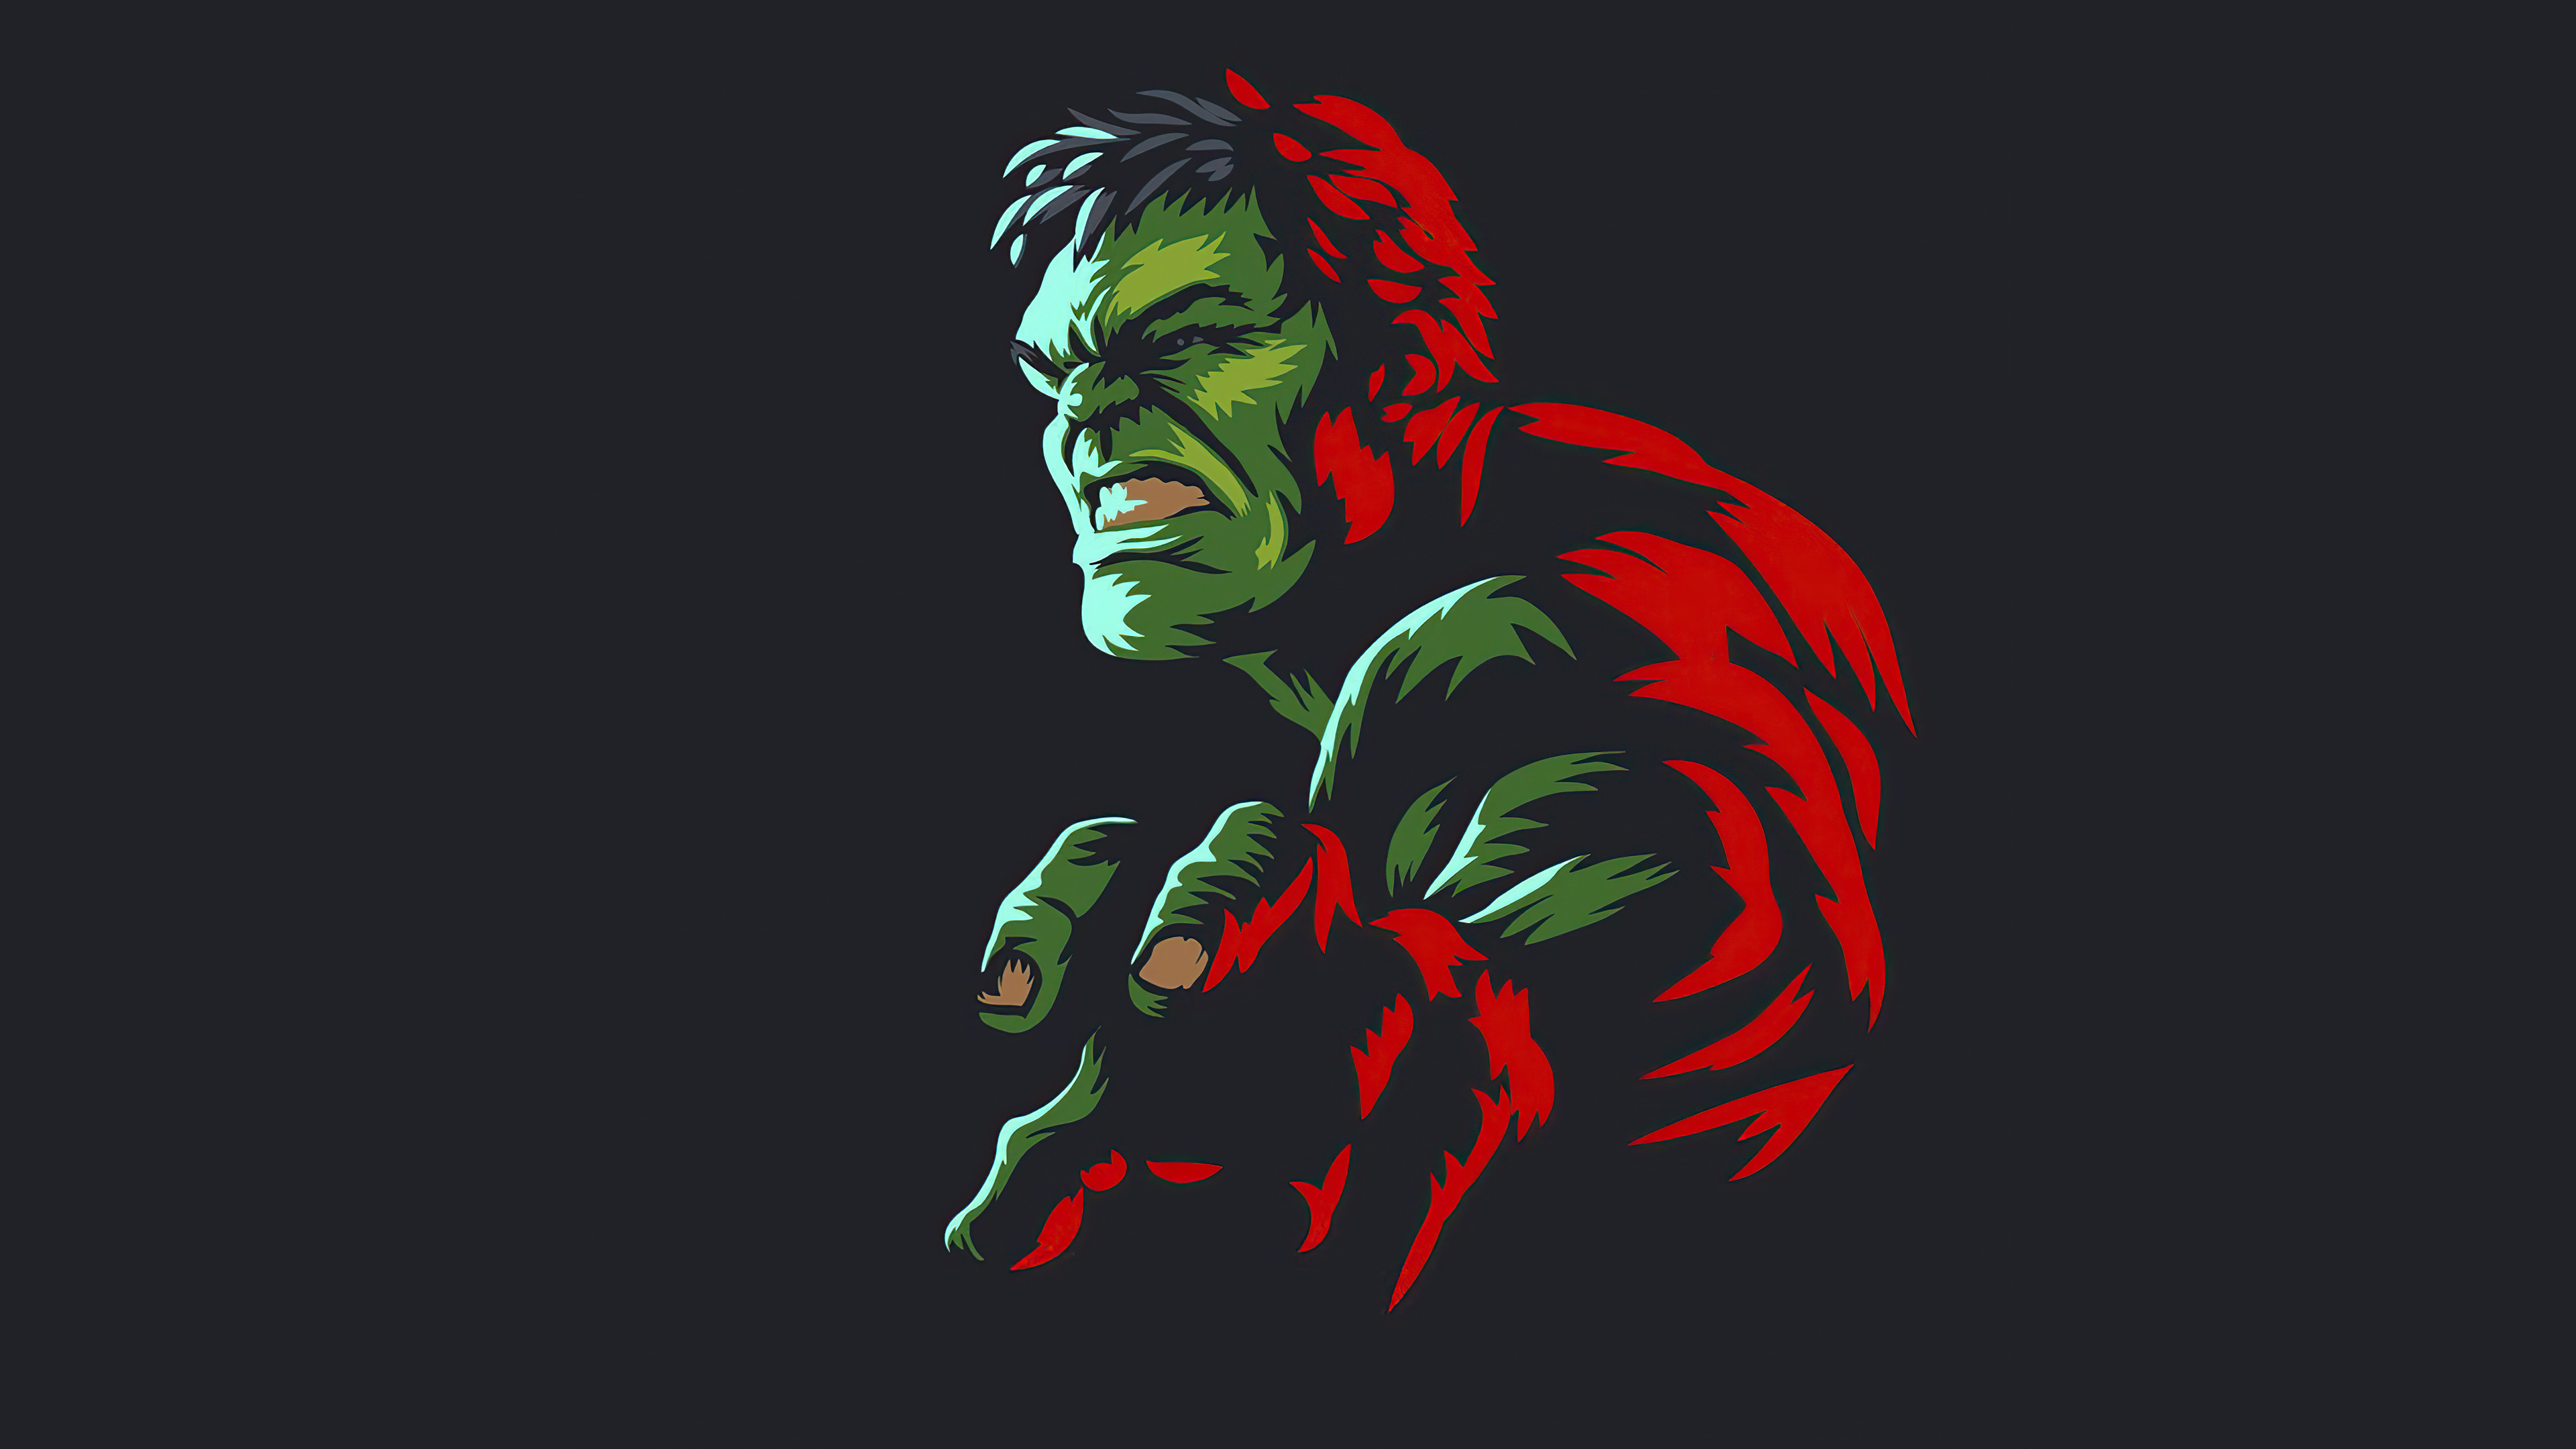 Hulk Minimal Art 4k, HD Superheroes, 4k Wallpapers, Images, Backgrounds